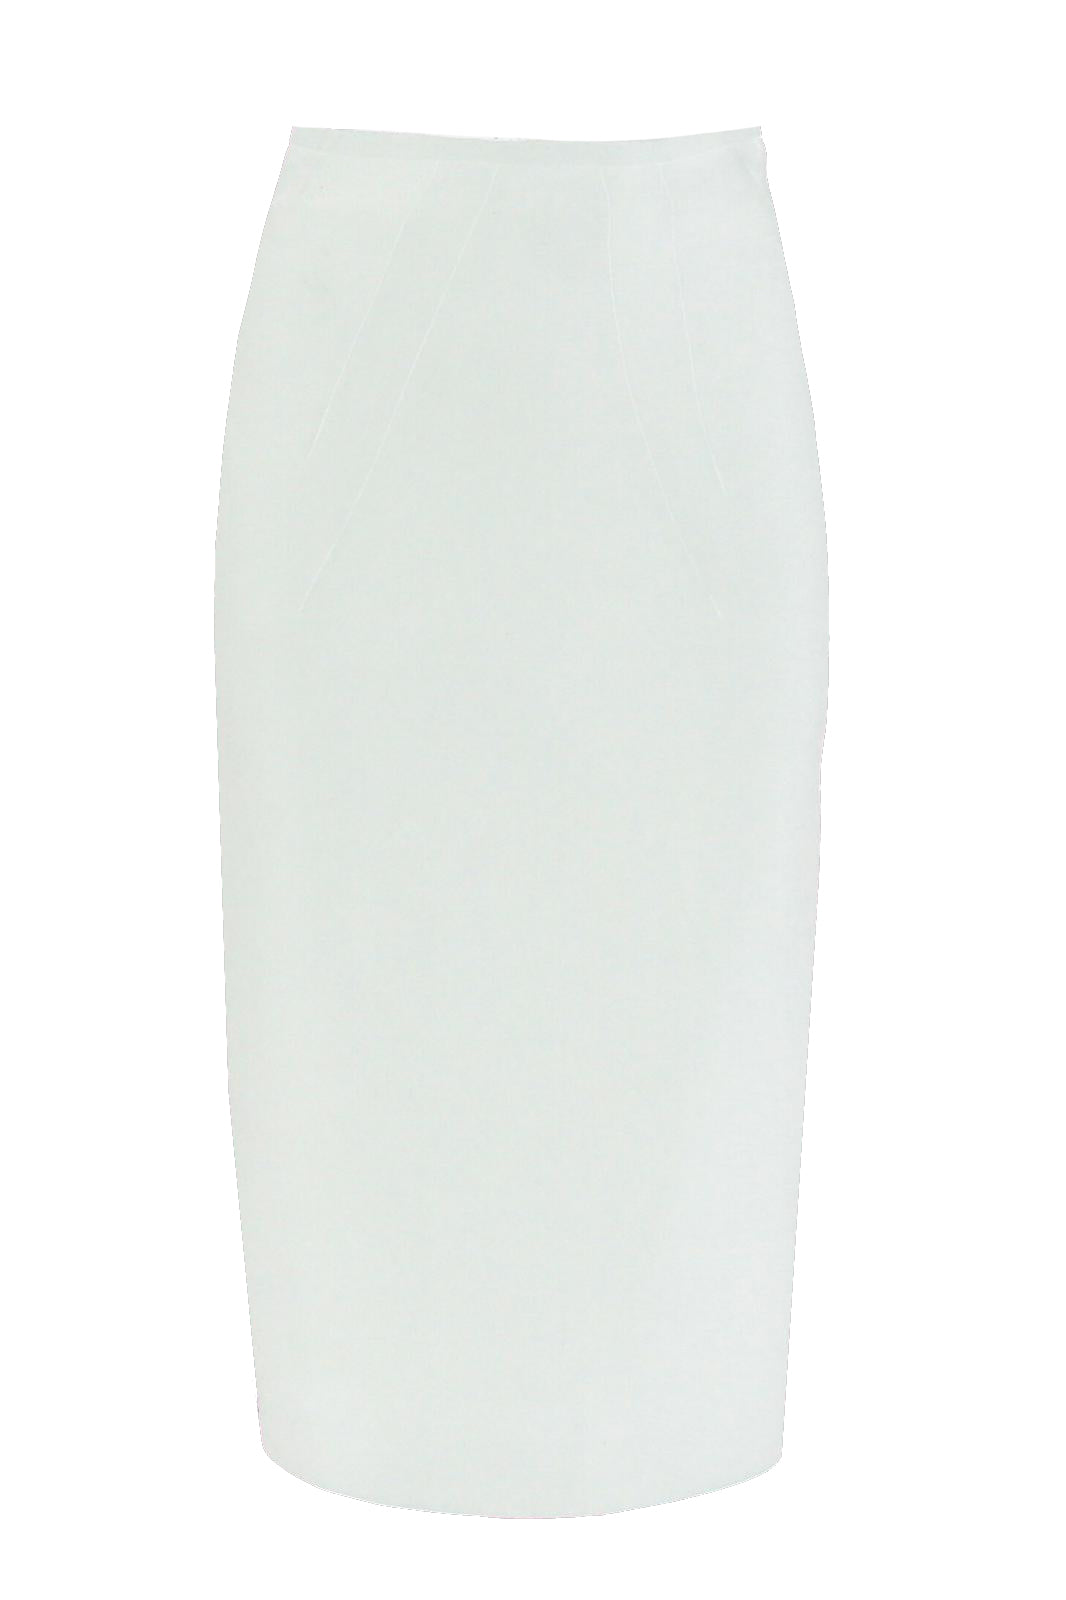 Abella White Crepe Pencil Skirt